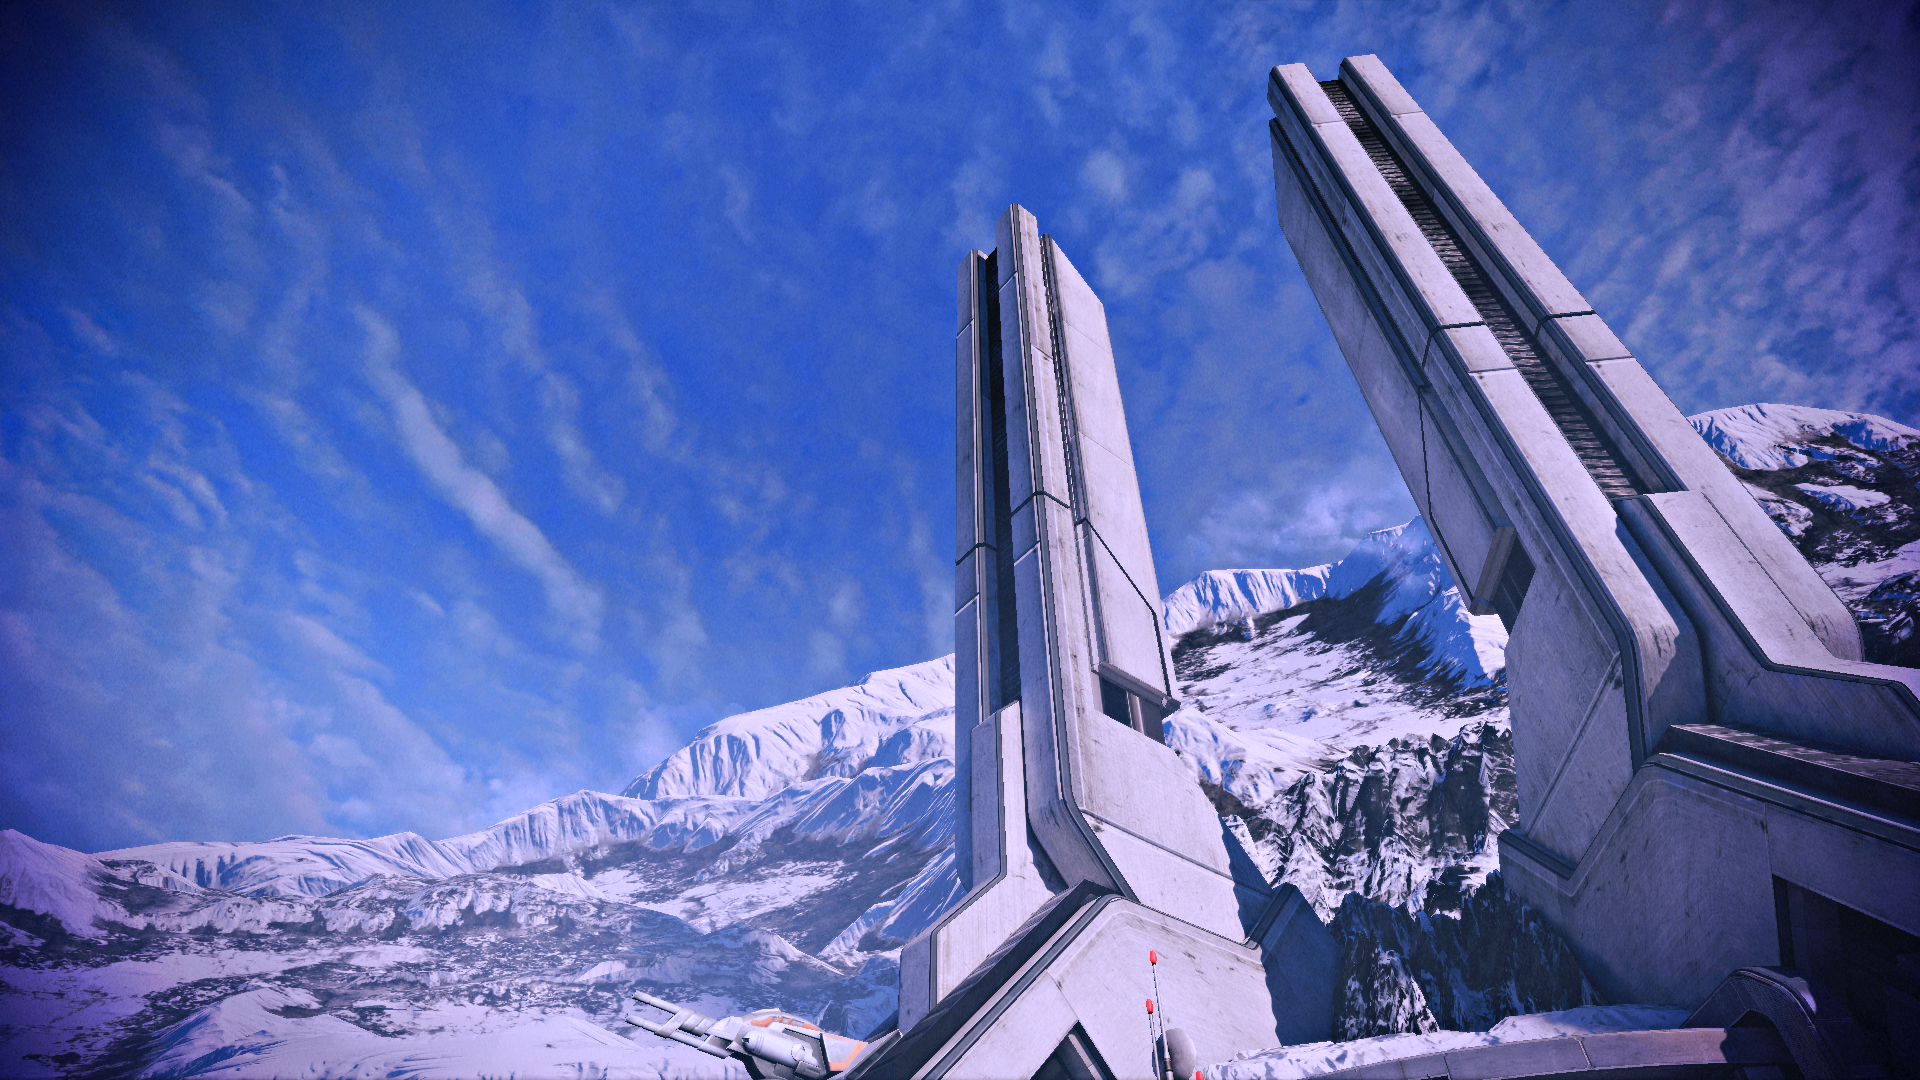 General 1920x1080 video games Mass Effect 3 Mass Effect: Legendary Edition sky clouds snow blue white Bioware video game art screen shot mountains CGI